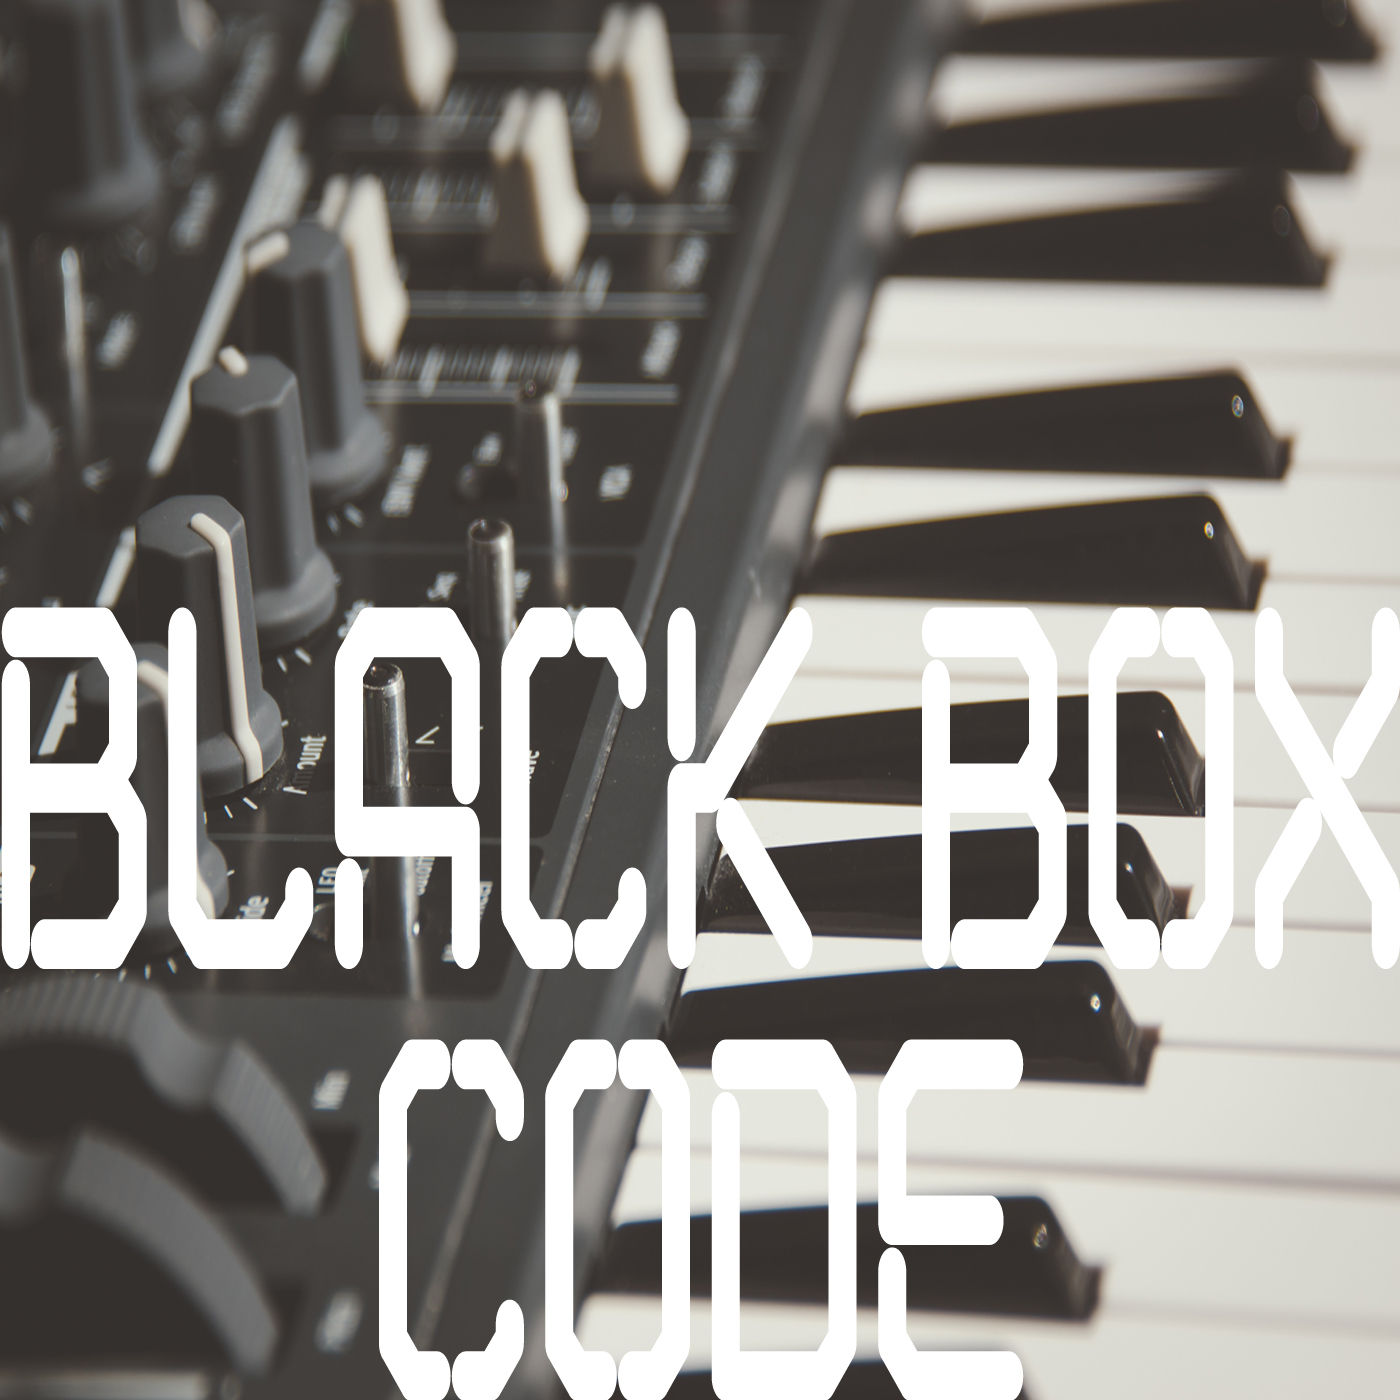 BLACK BOX - Code(희망, 신남, 격렬, 진지, 비트, 즐거움, 흥겨움, 발랄, 클럽, 흥함, 활기, 행복, 당당, 경쾌, 일렉)